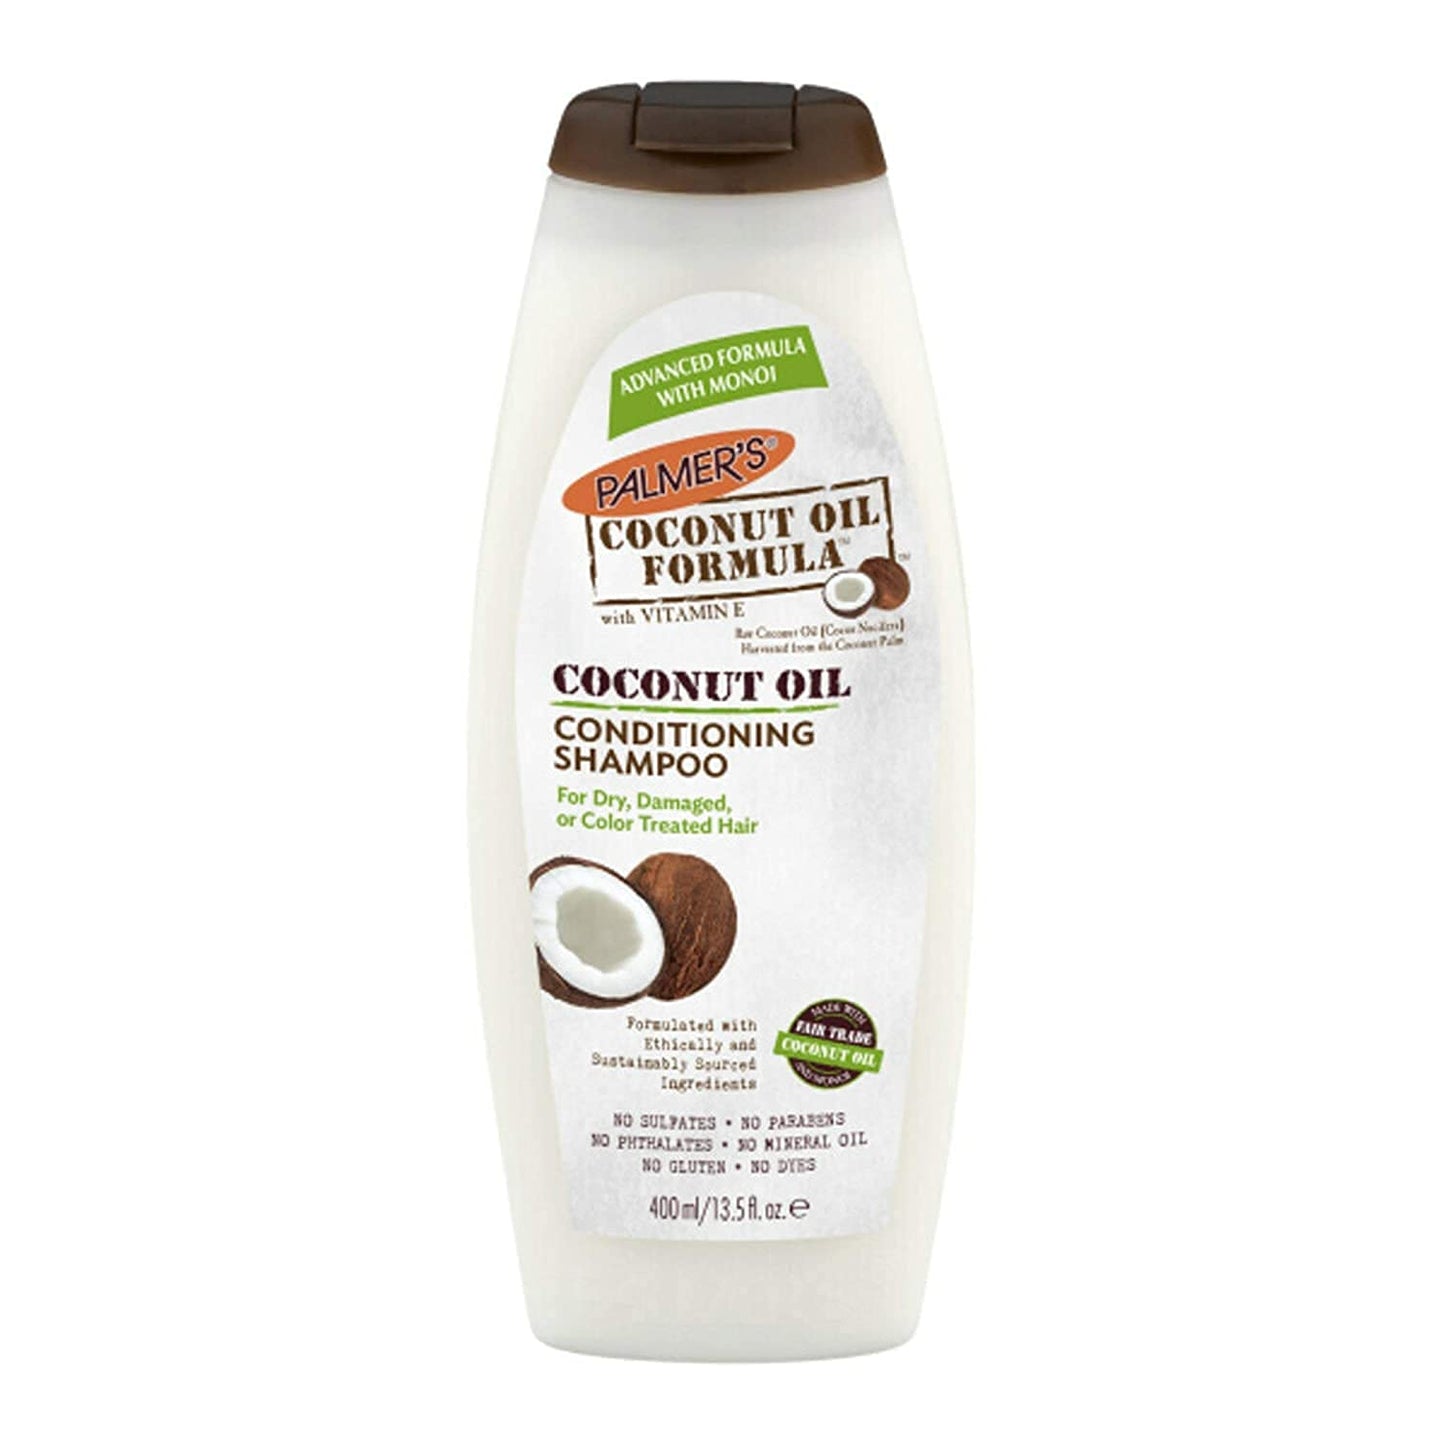 Palmer's Coconut Oil Formula Conditioning Shampoo 13.5 oz